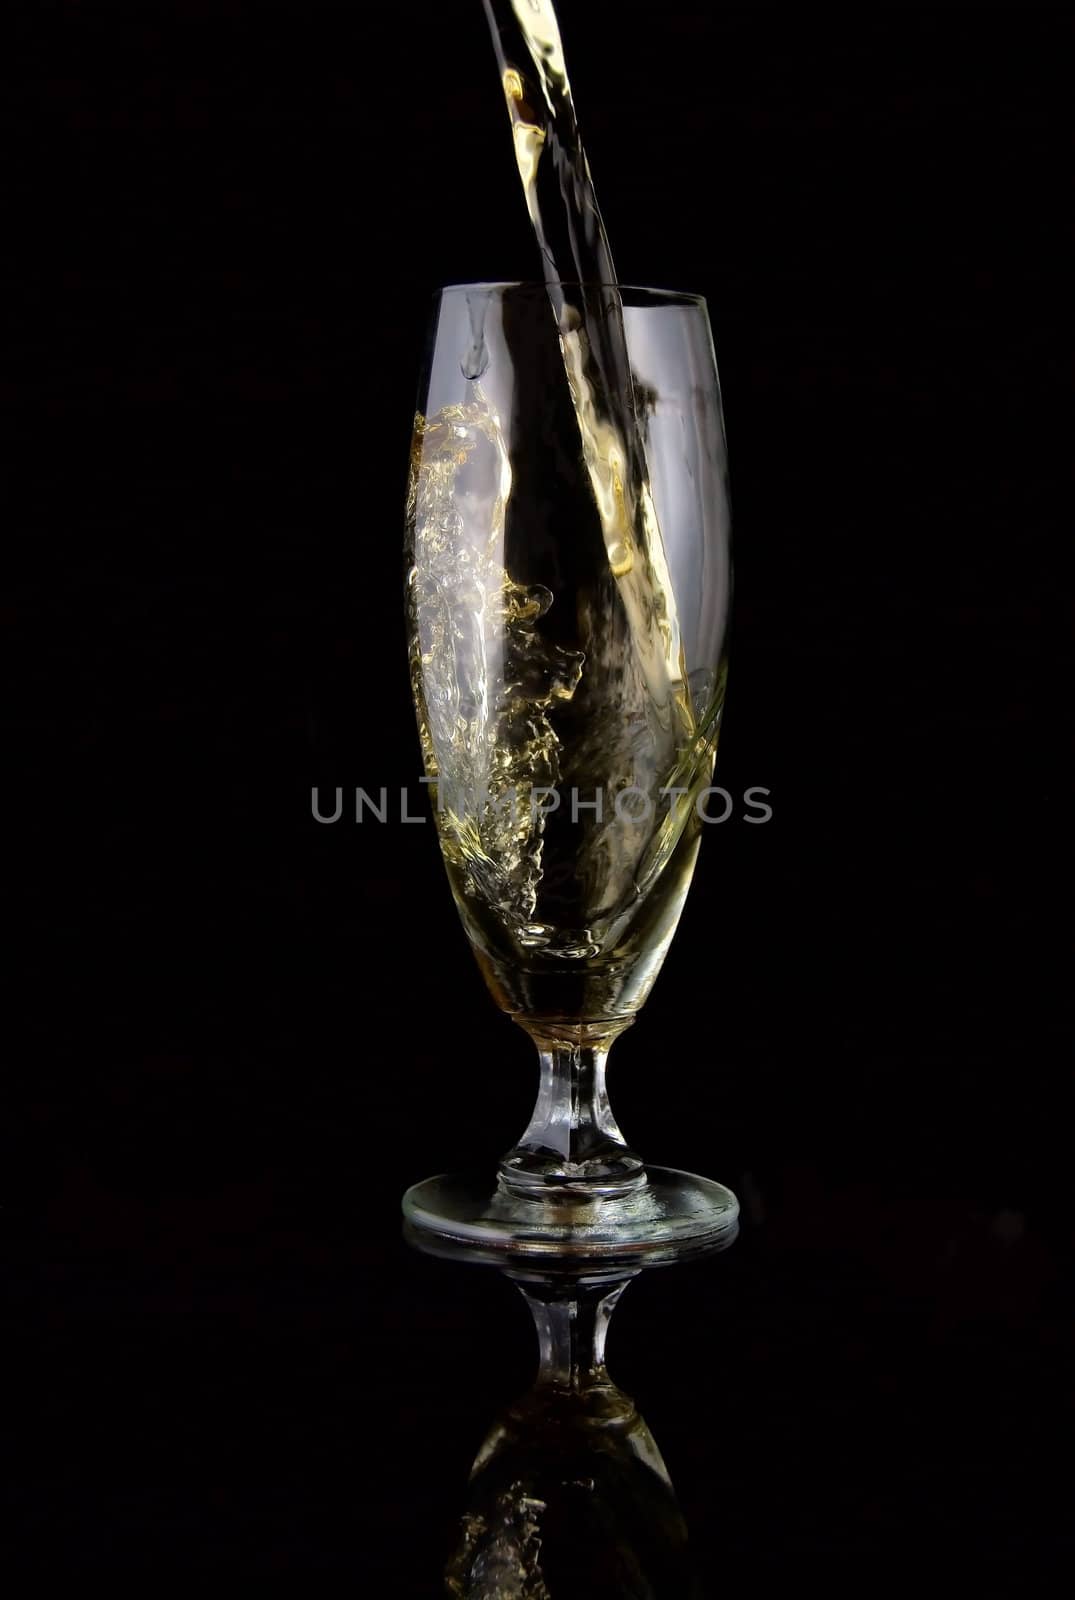 glass of wine poured by anki21